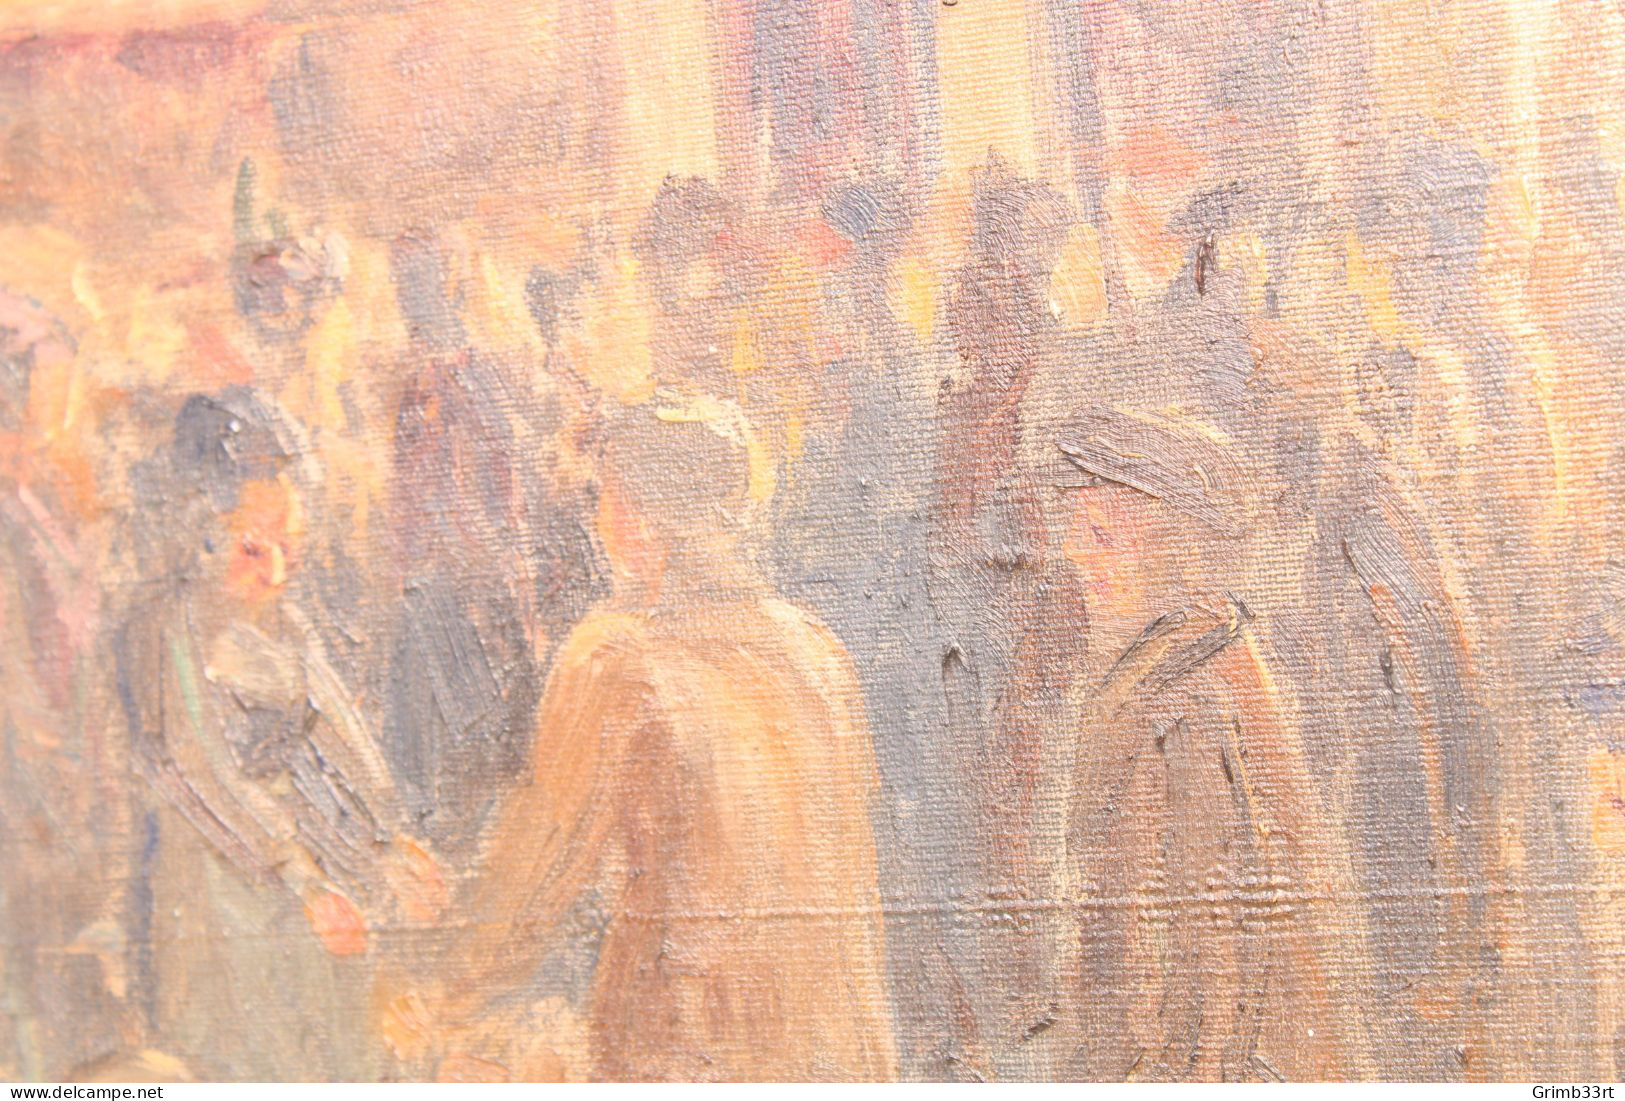 Adolf Baeyens (1886-1969) - Fruitmarkt in Gent - Olie op doek - 110 x 85 cm